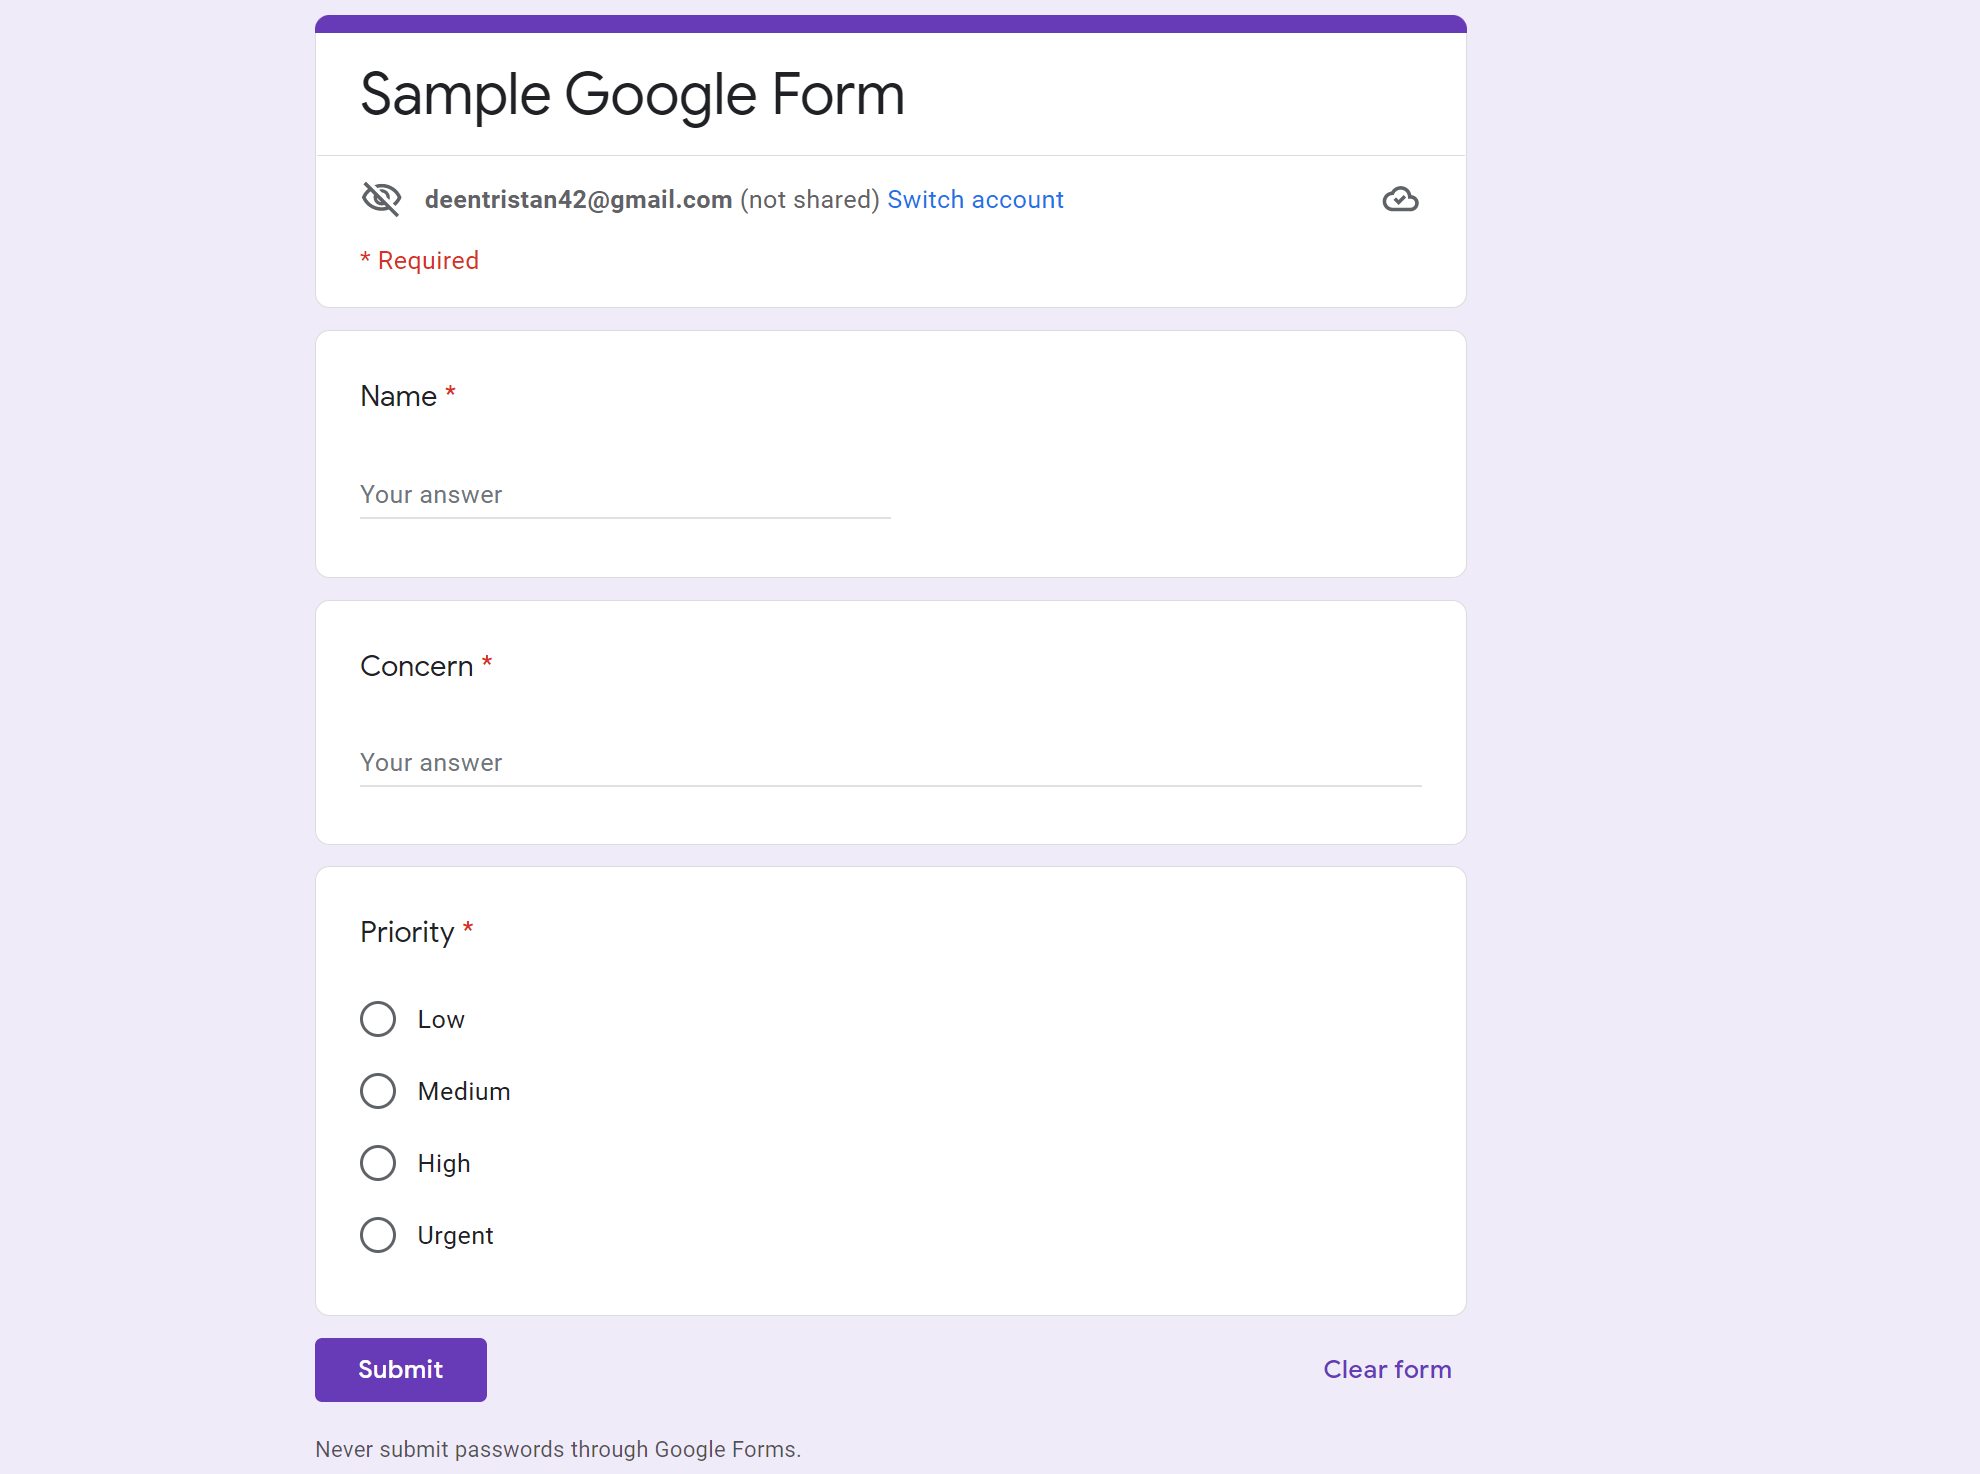 Creating a sample Google Form